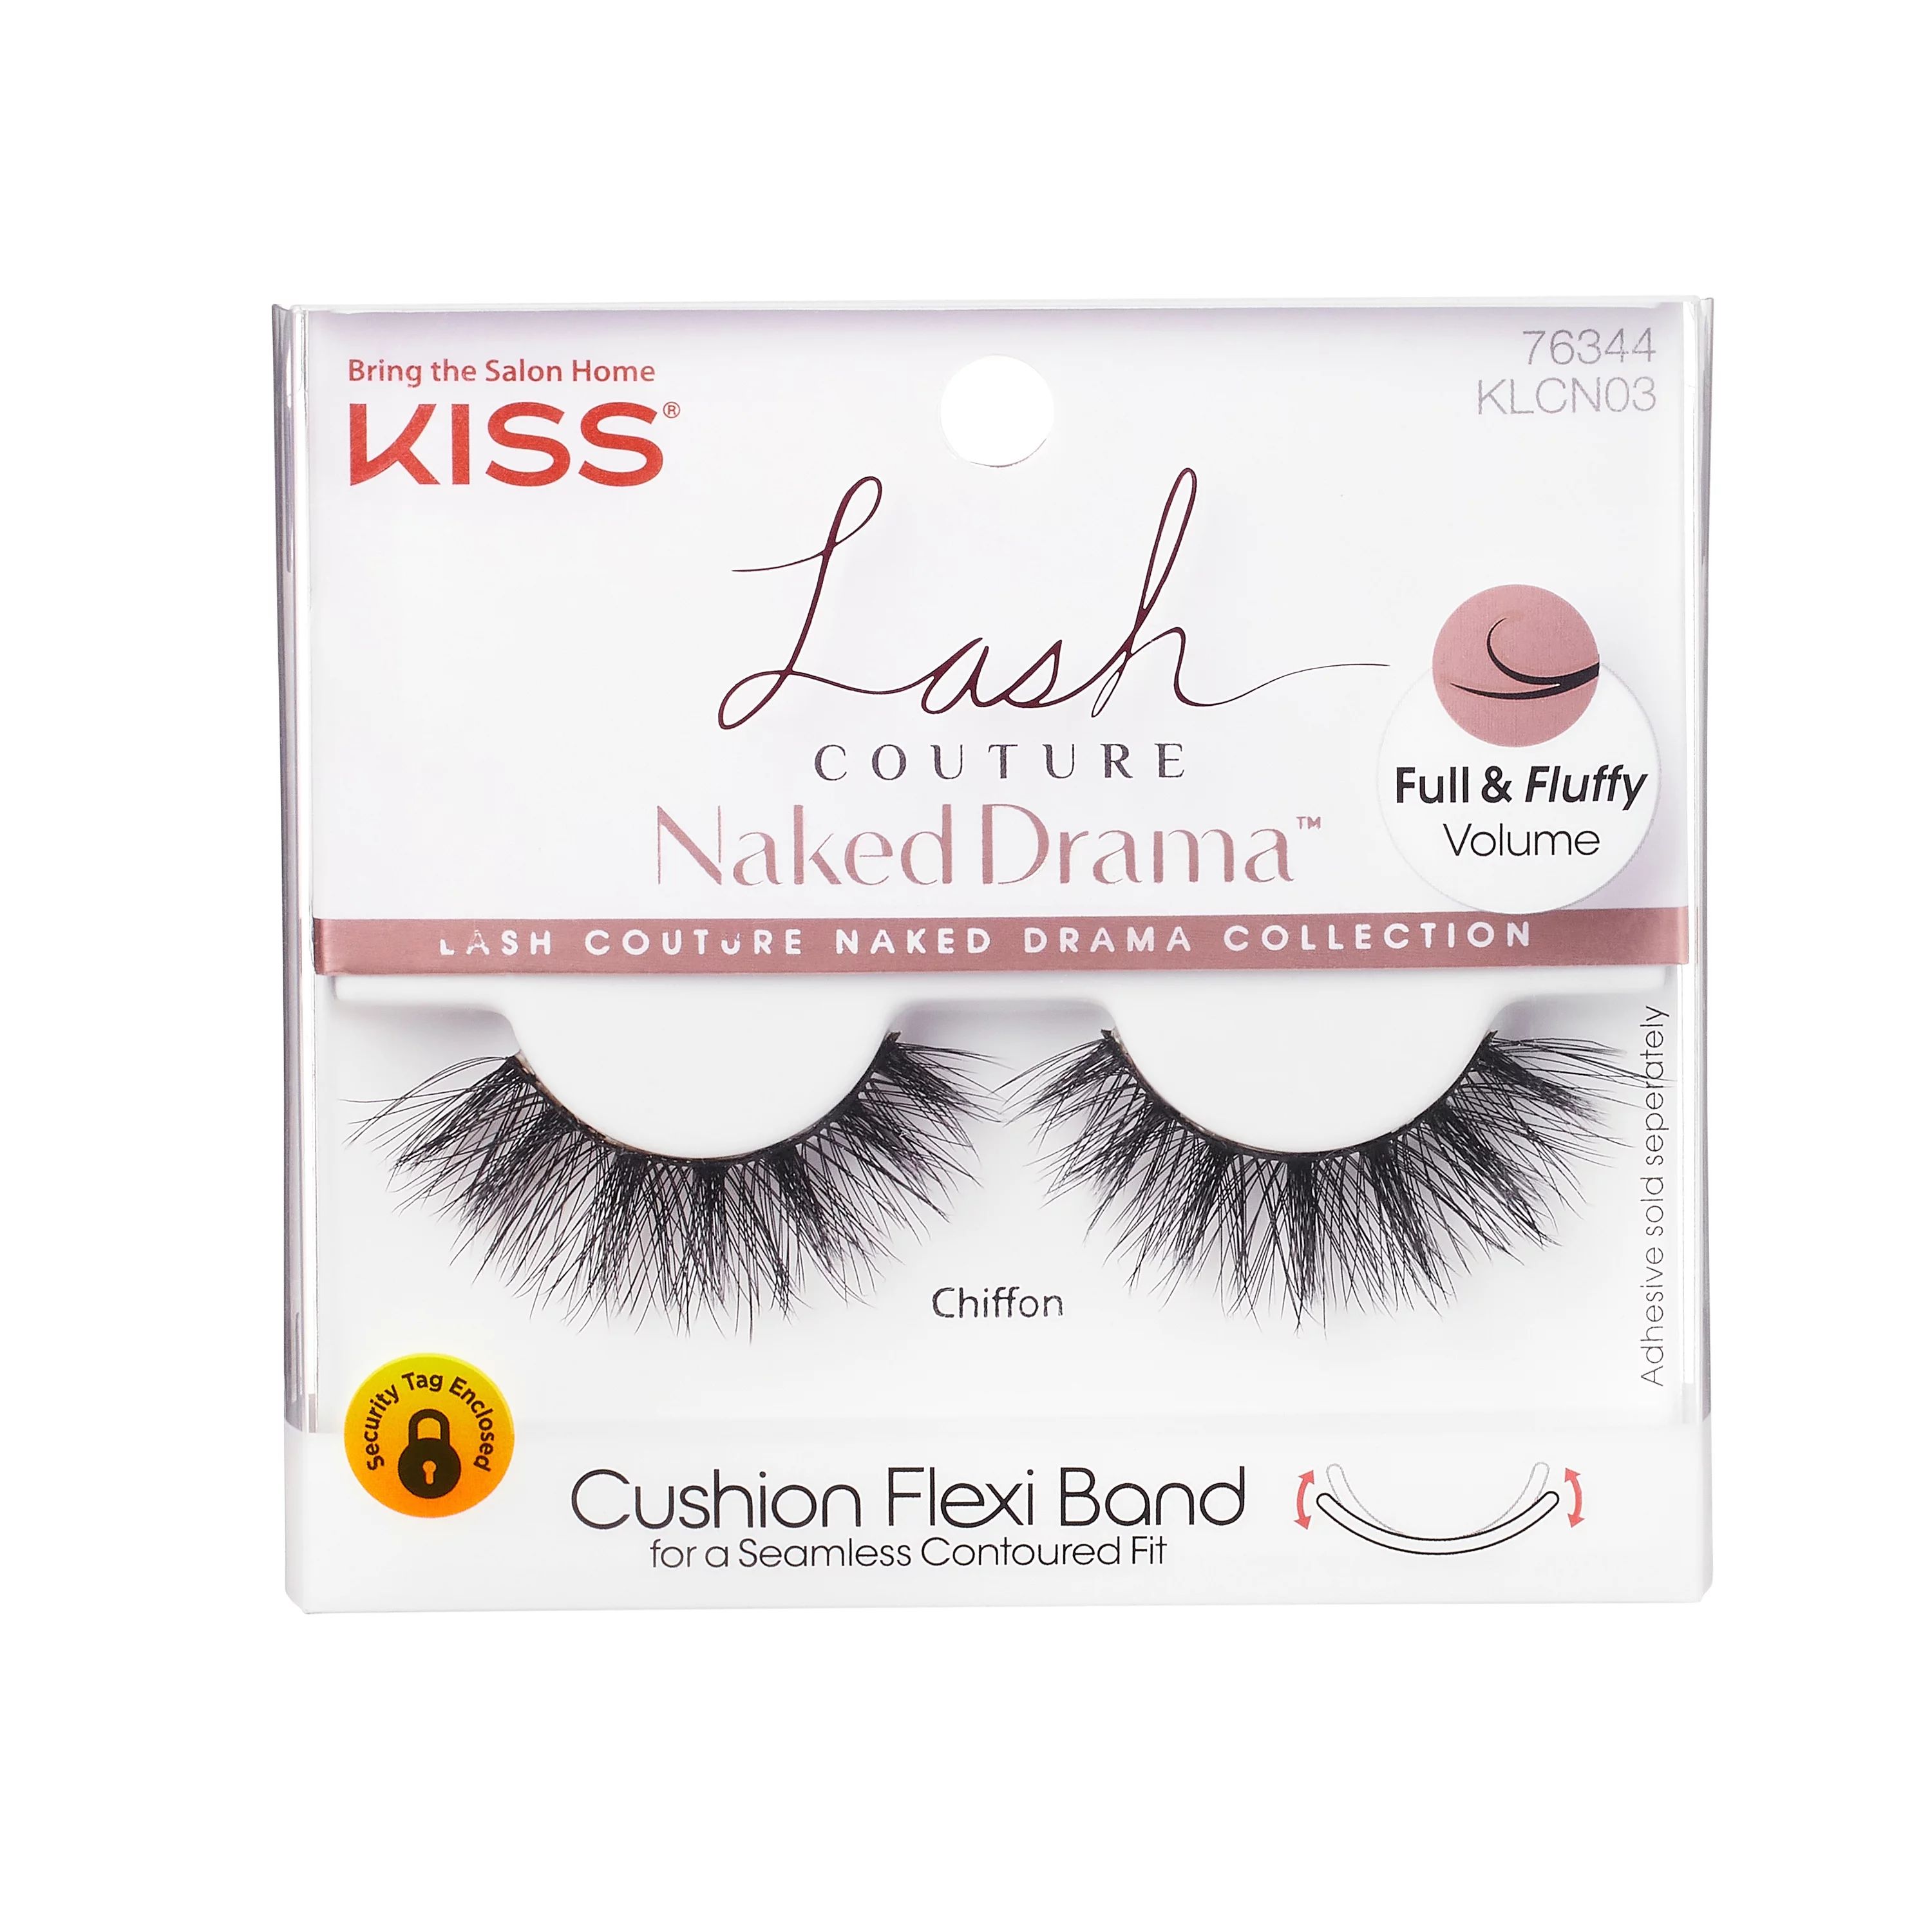 KISS Lash Couture Naked Drama Collection Cushion Flexi-Band False Eyelashes - Chiffon - 1 Pair | Walmart (US)